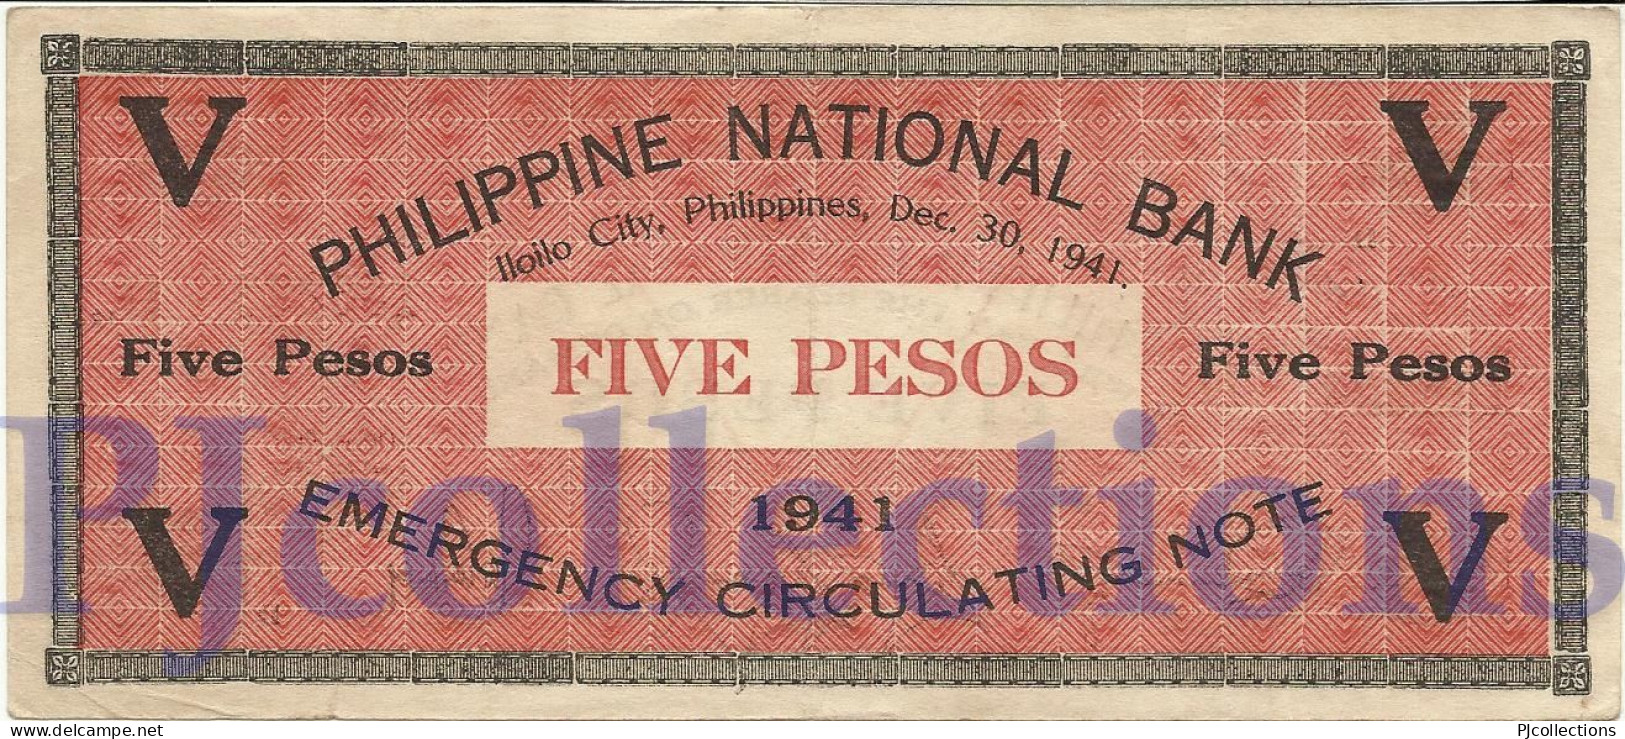 PHILIPPINES 5 PESOS 1941 PICK S307 AU W/GRAFFITI EMERGENCY BANKNOTE - Philippines